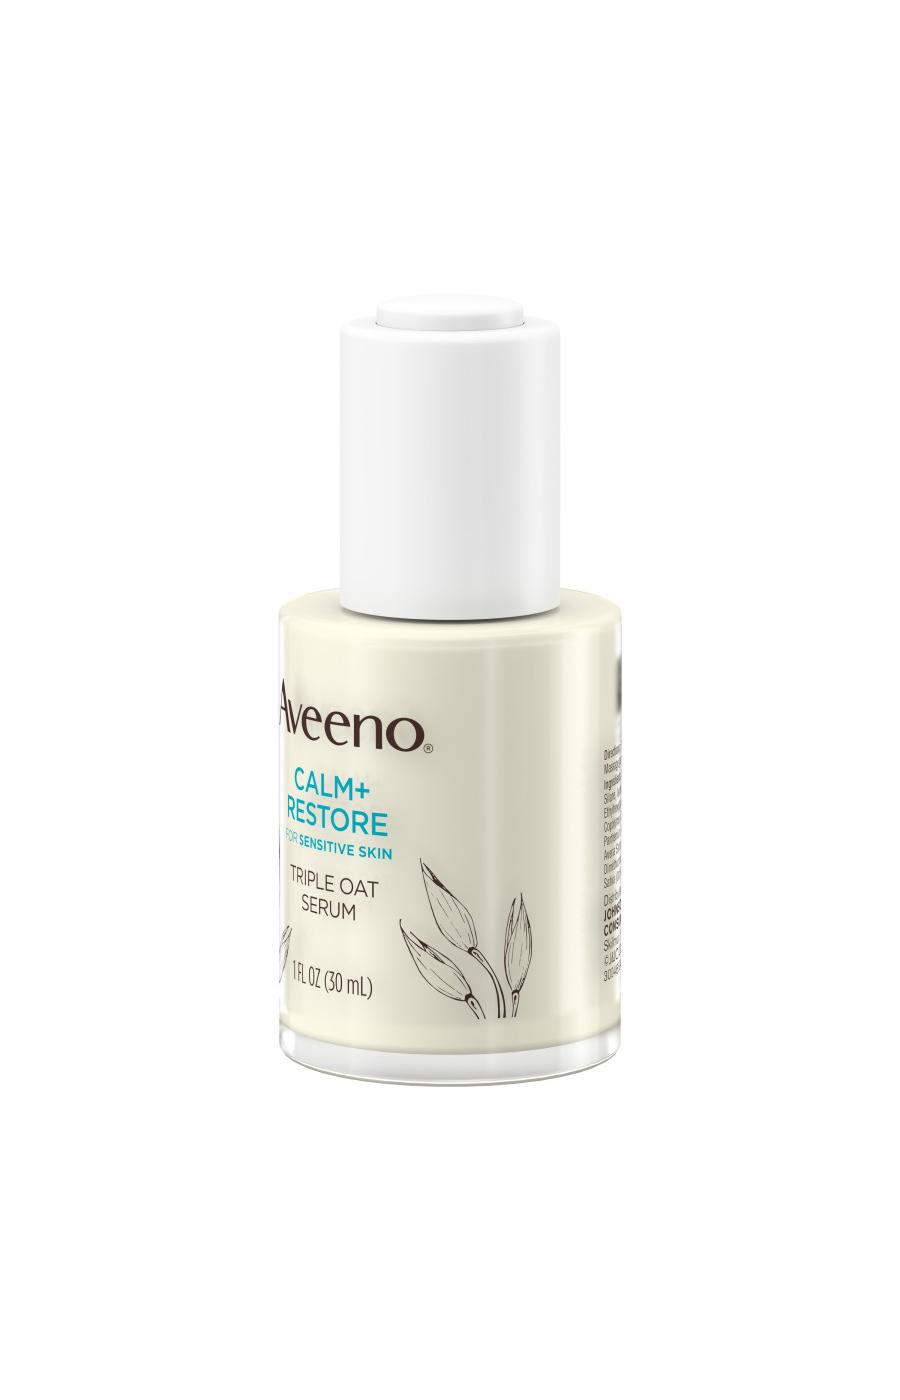 Aveeno Calm + Restore Triple Oat Face Serum, For Sensitive Skin; image 6 of 7